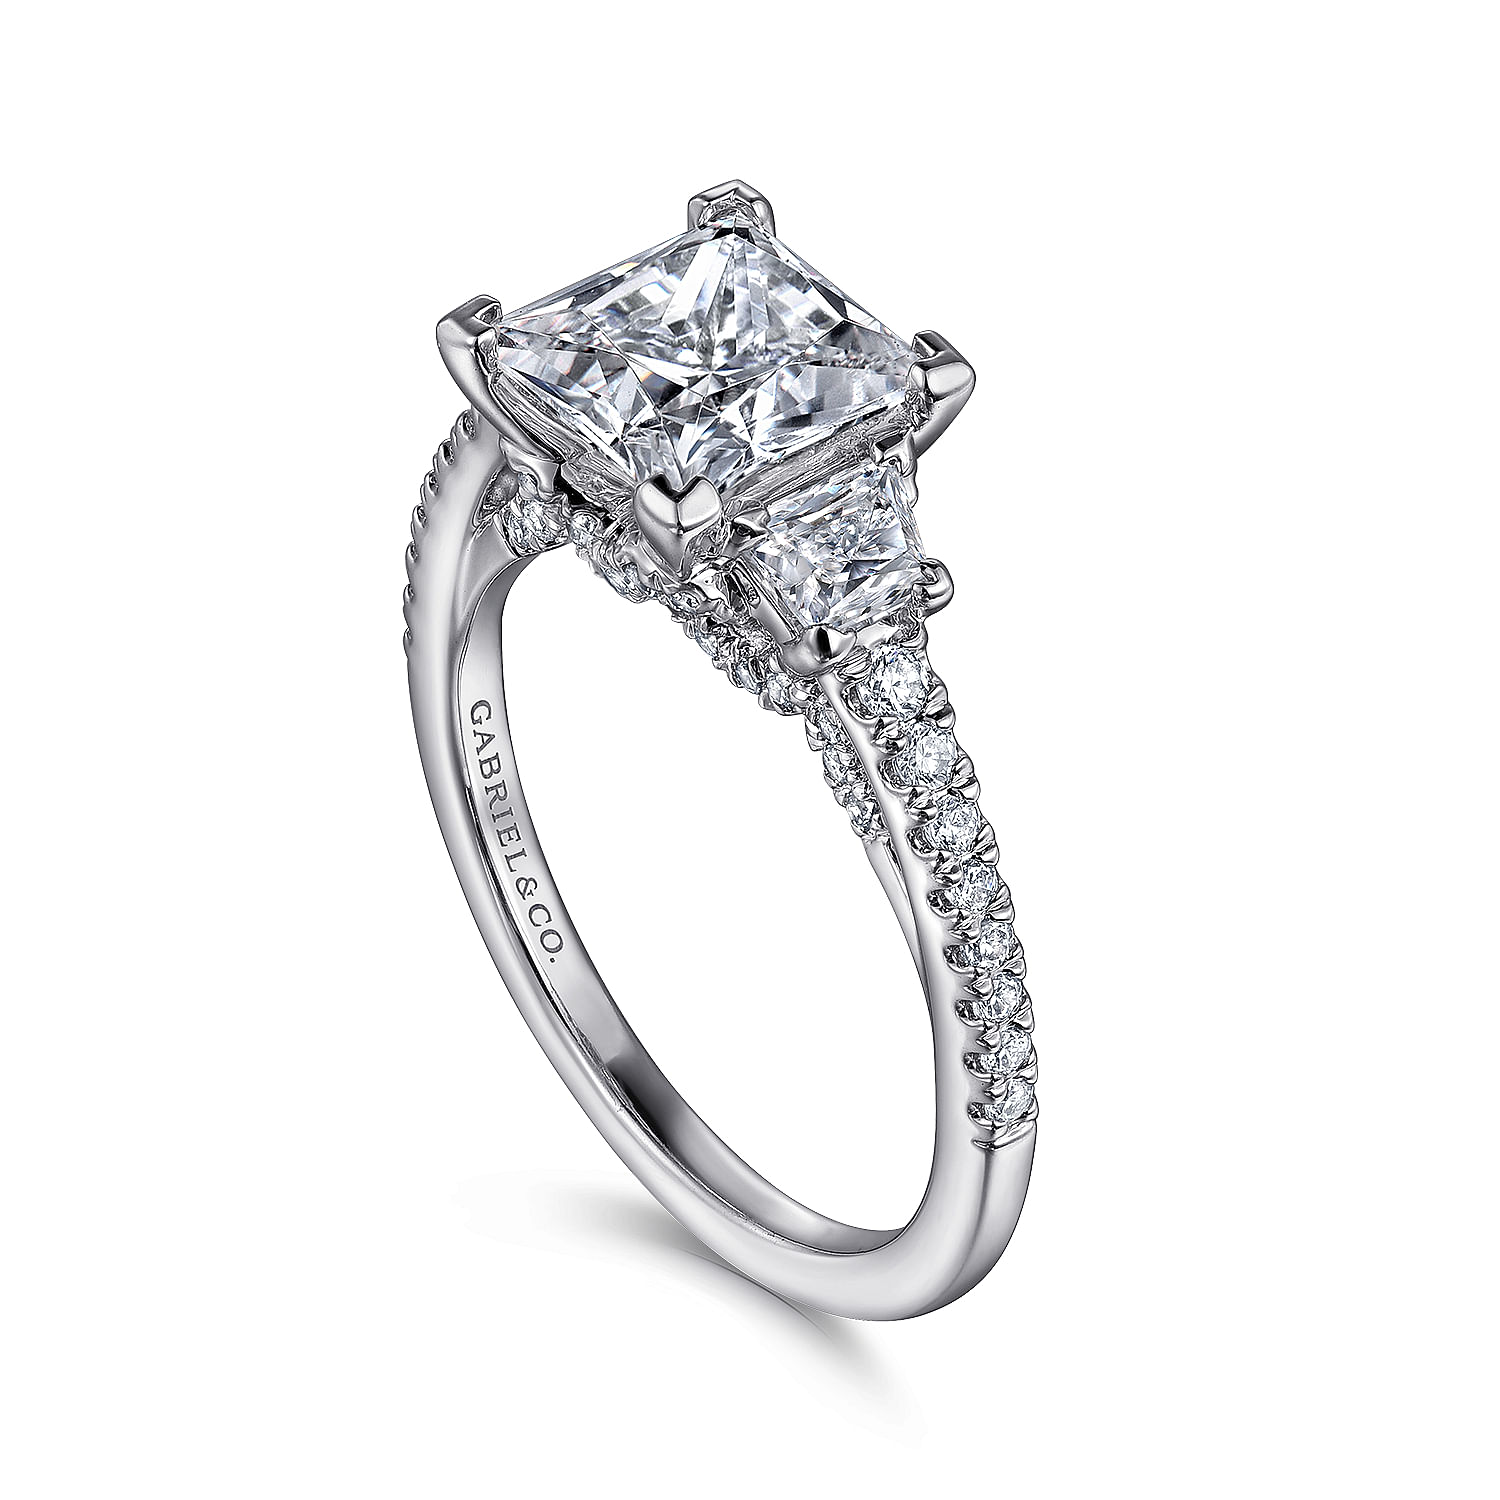 Quentin - 18K White Gold Princess Cut Three Stone Diamond Engagement Ring - 0.78 ct - Shot 3